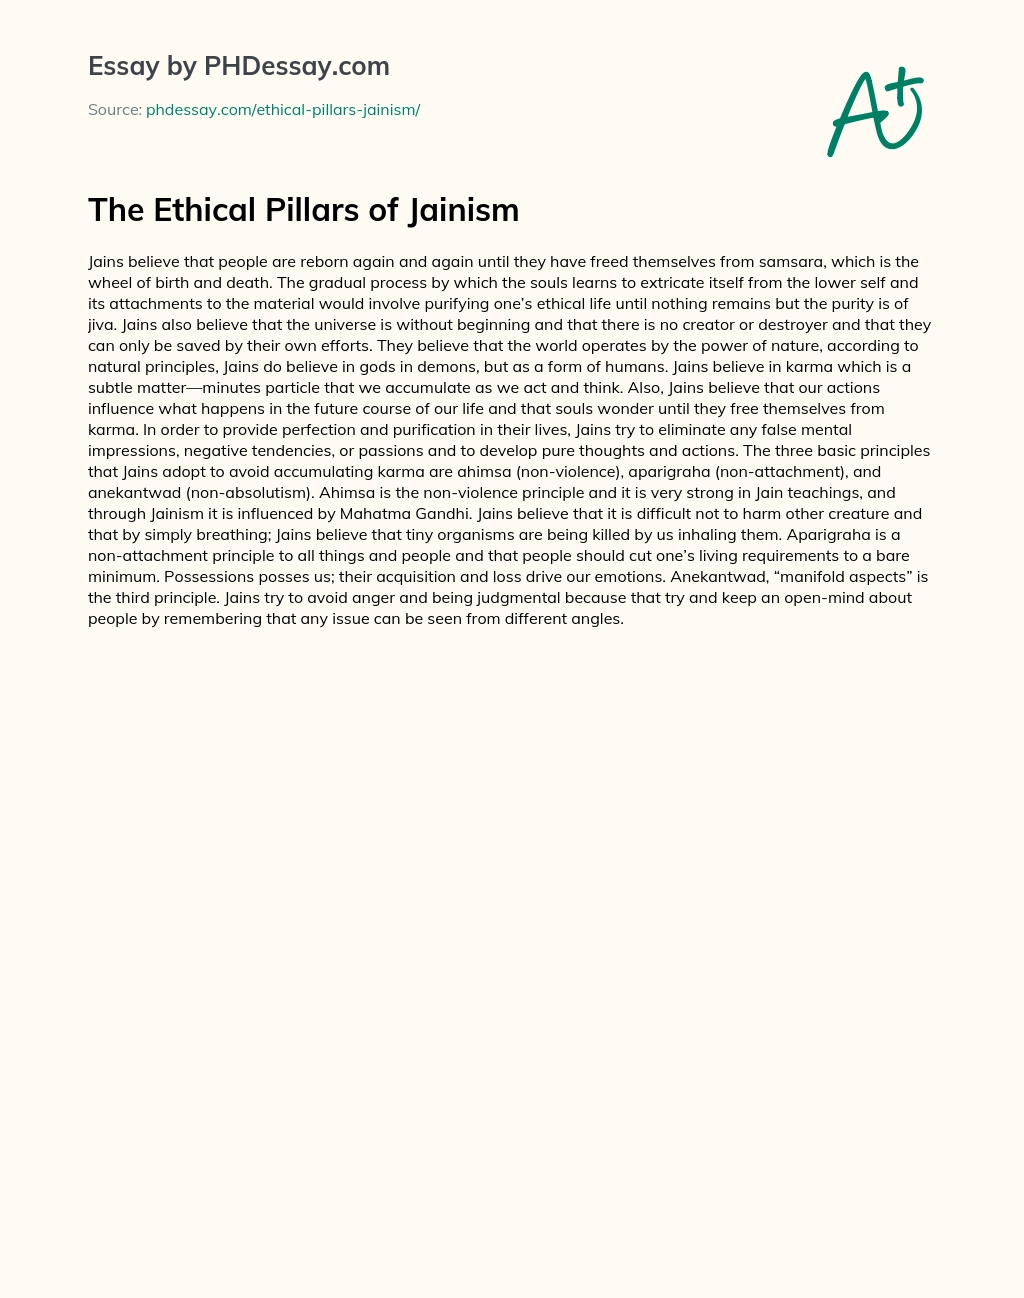 The Ethical Pillars of Jainism essay